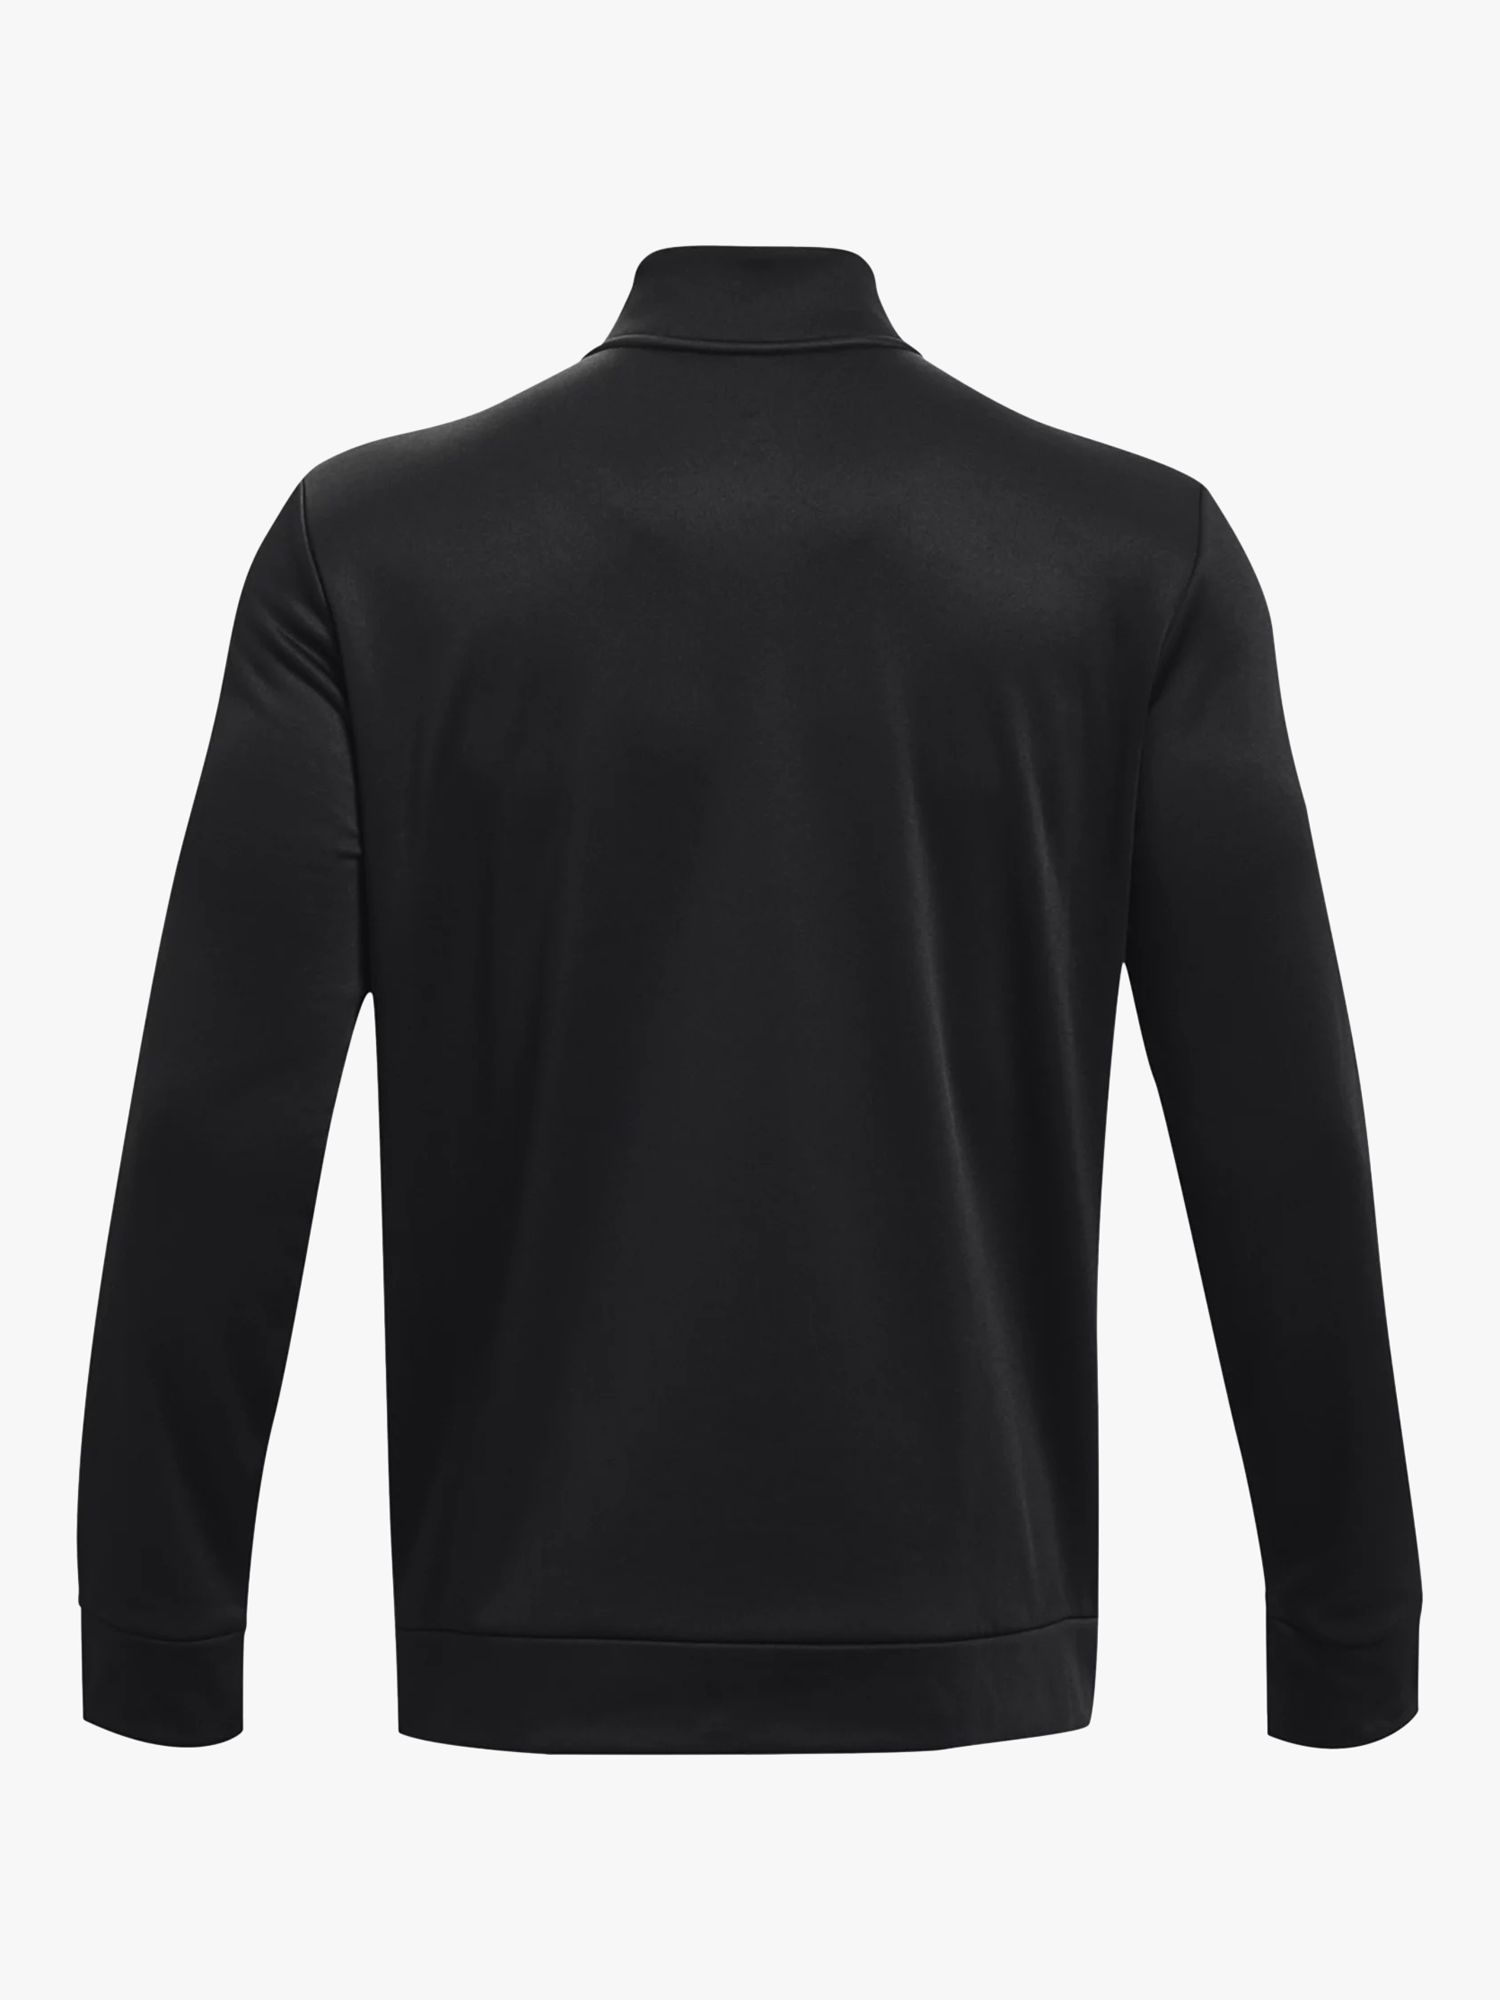 Under Armour Loose Heat Gear Women XL Black 1/4 Zip Long Sleeve Pullover Top